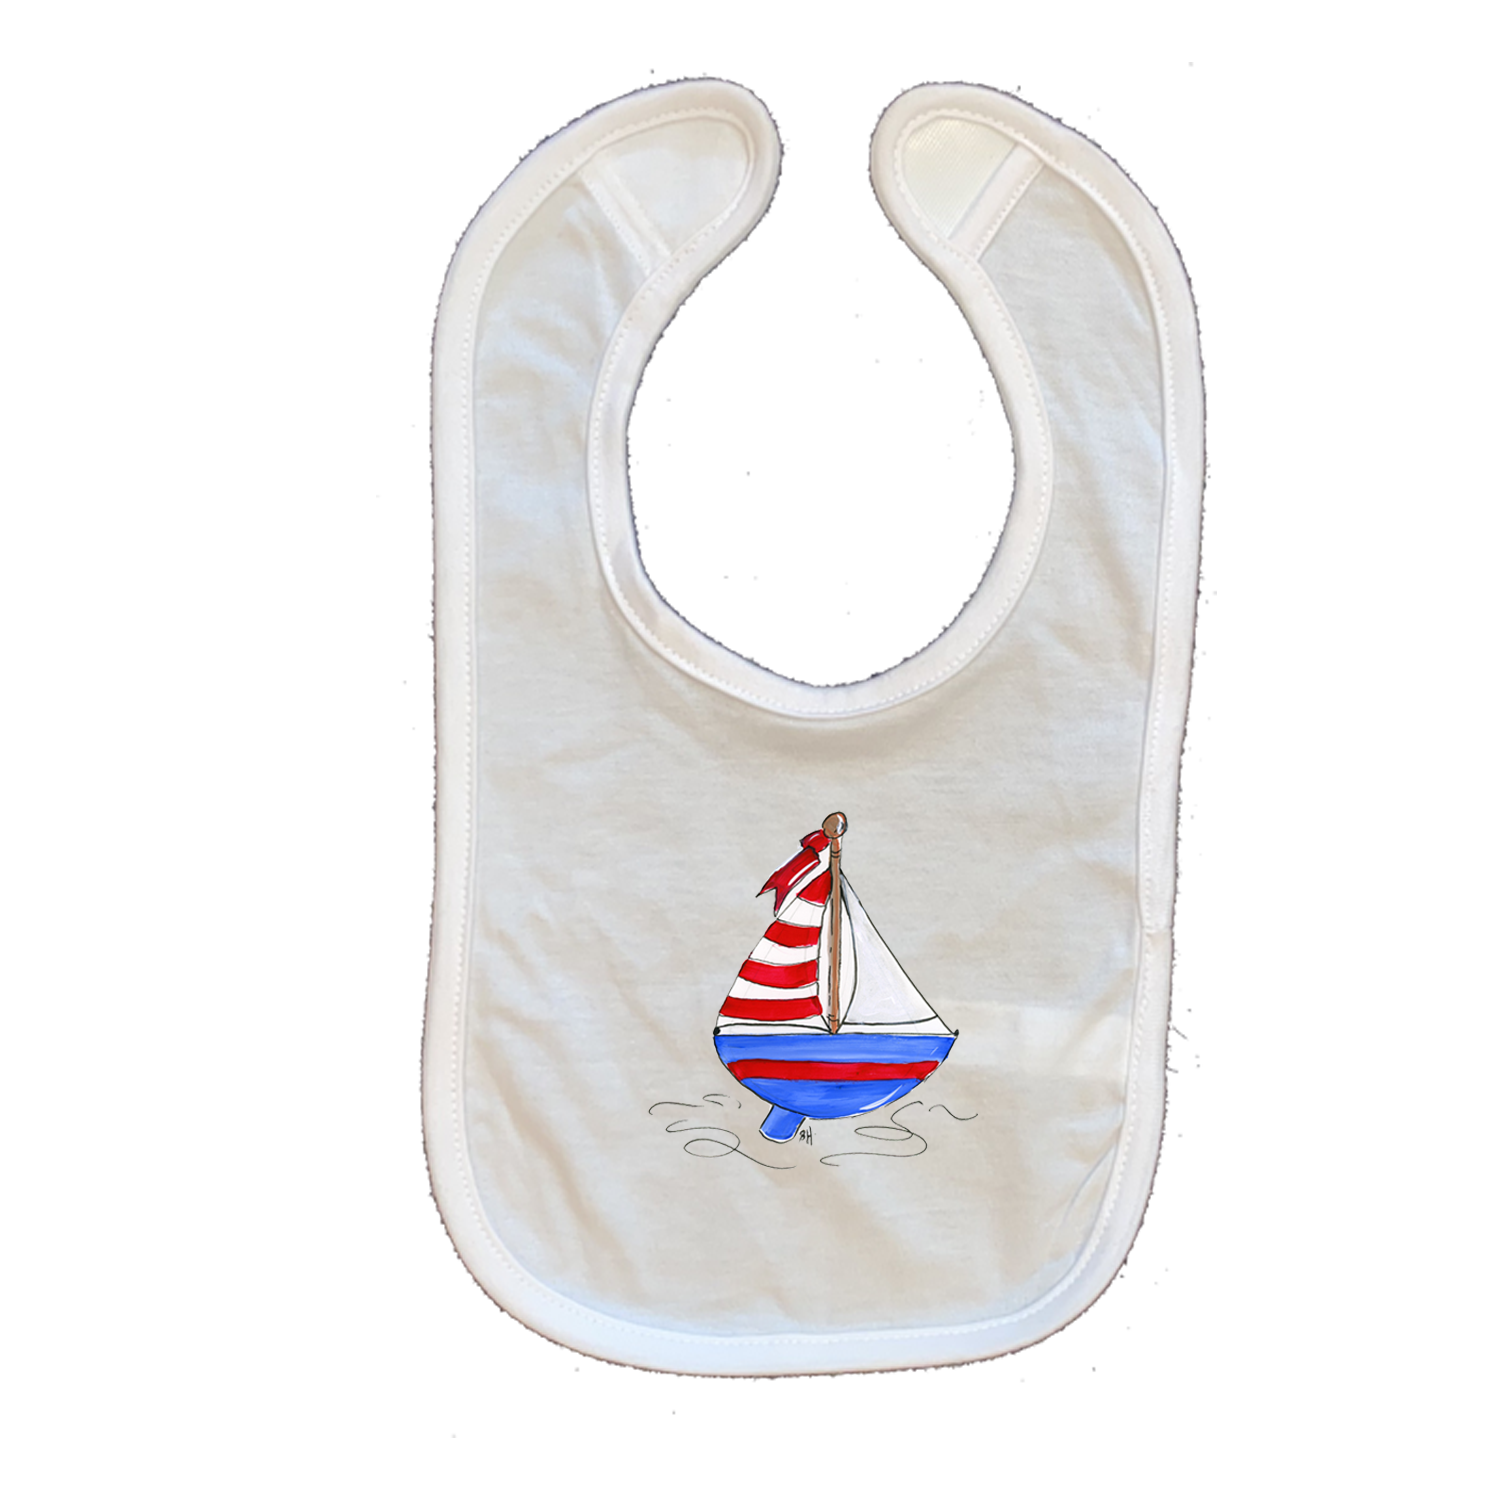 Cotton Infant Bib 1070 Red, White, Blue Boating